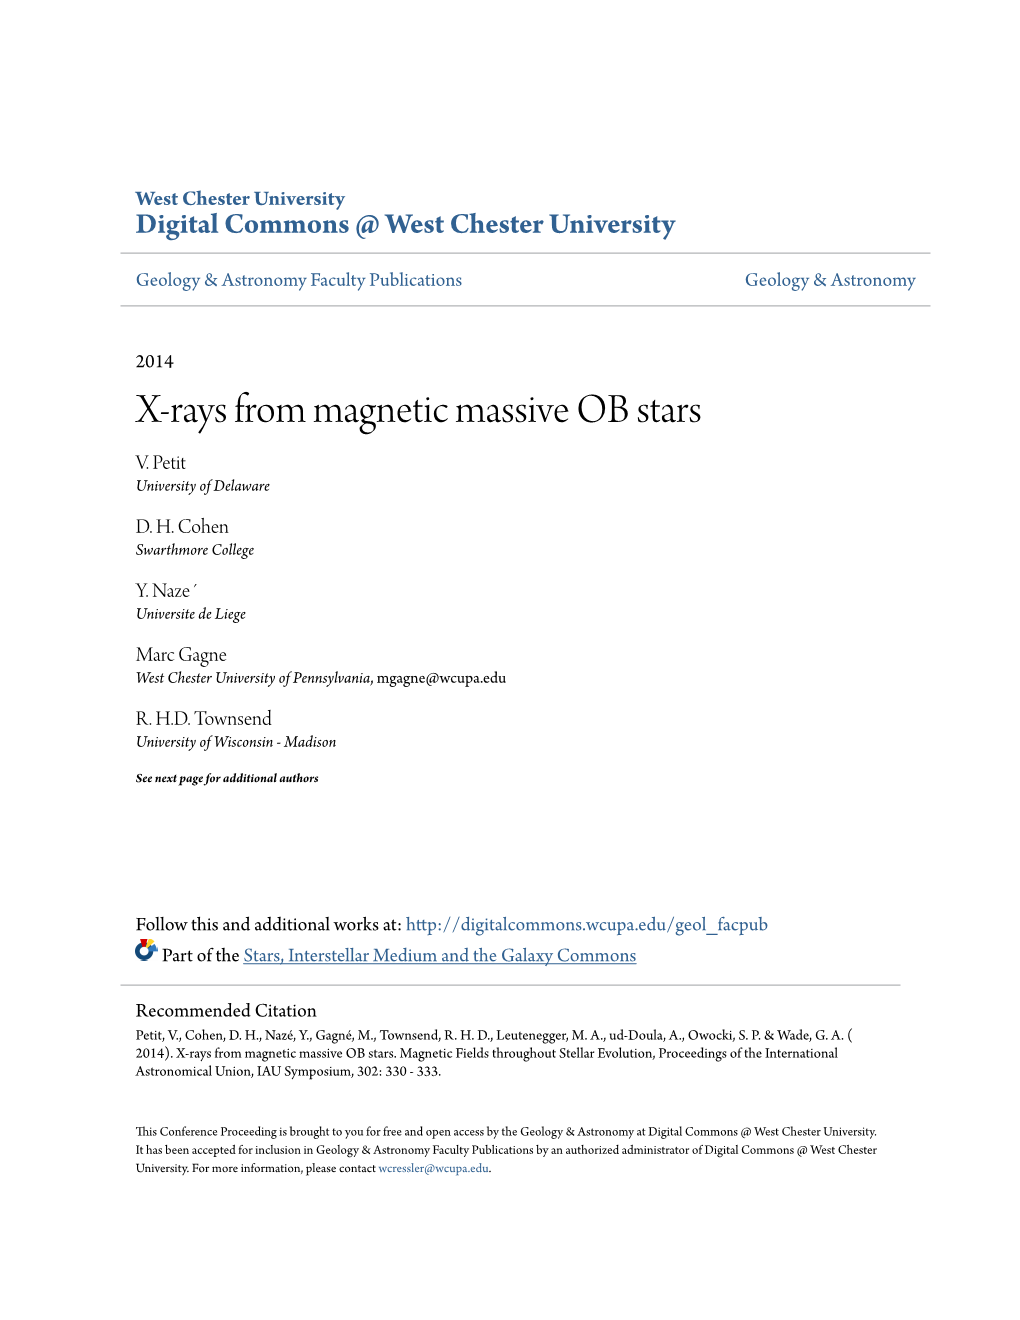 X-Rays from Magnetic Massive OB Stars V